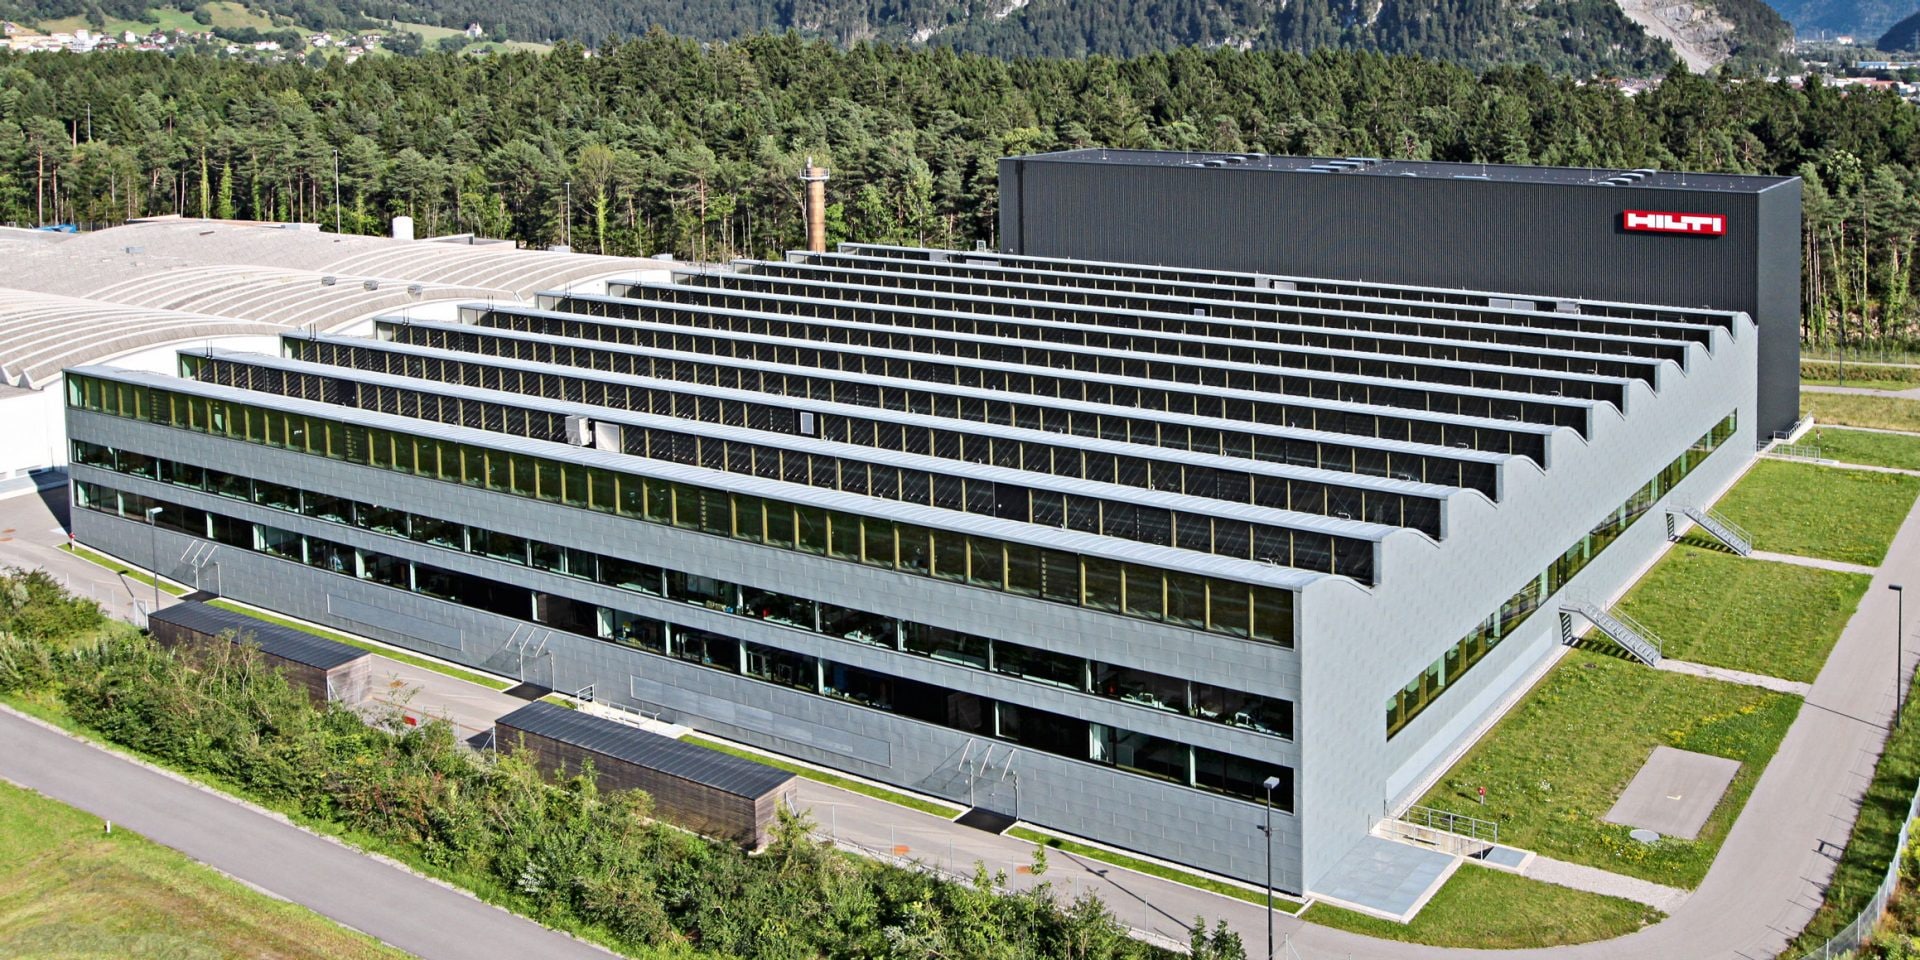 Luchtfoto Hilti-fabriek in Thüringen in Oostenrijk